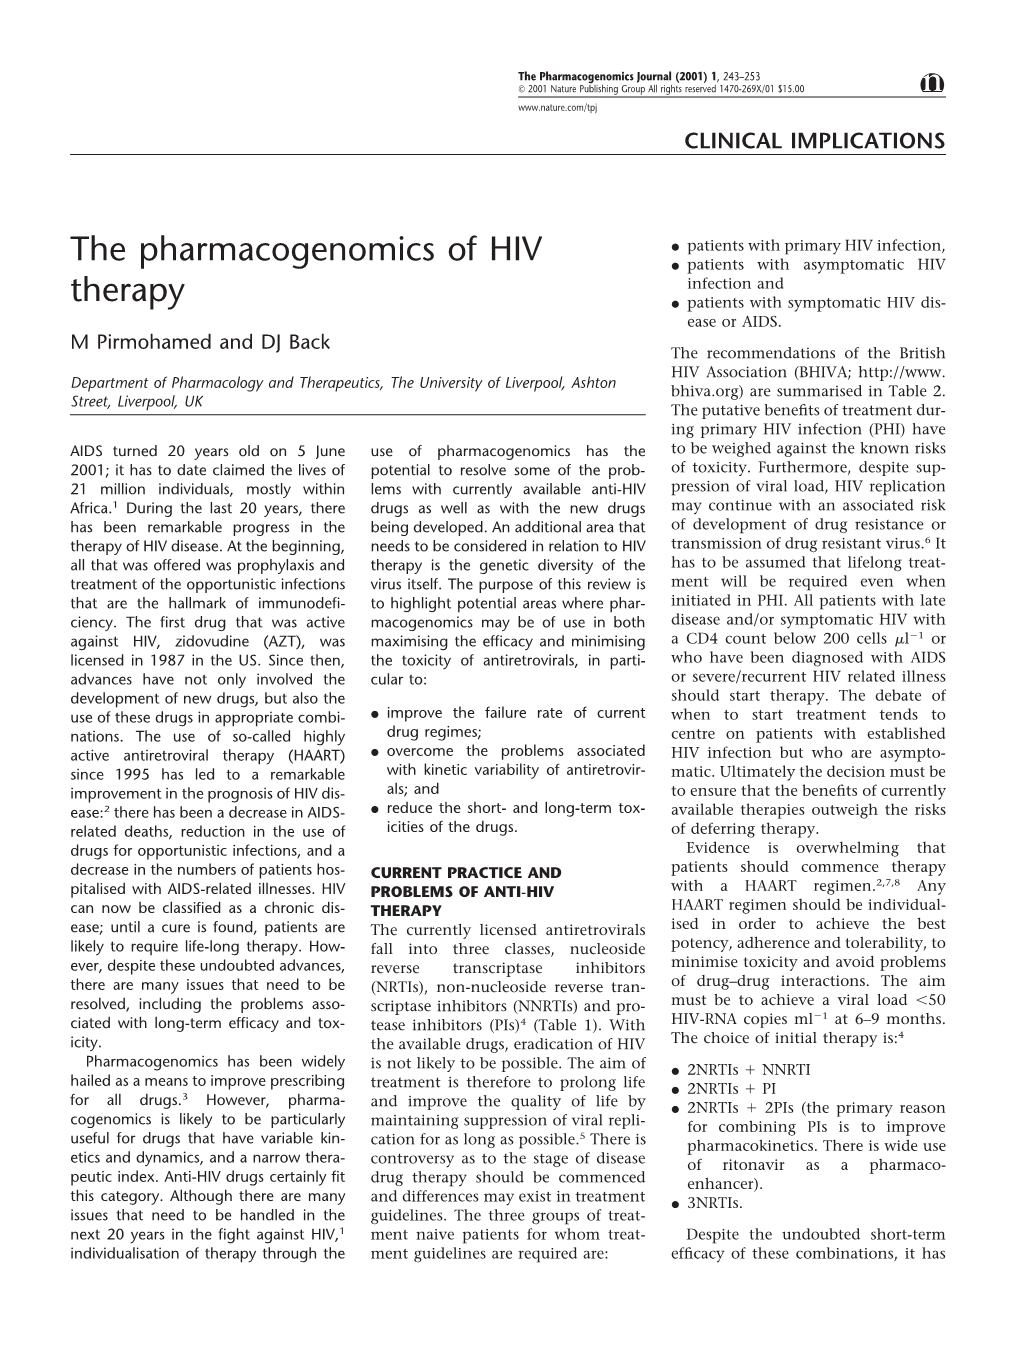 The Pharmacogenomics of HIV Therapy